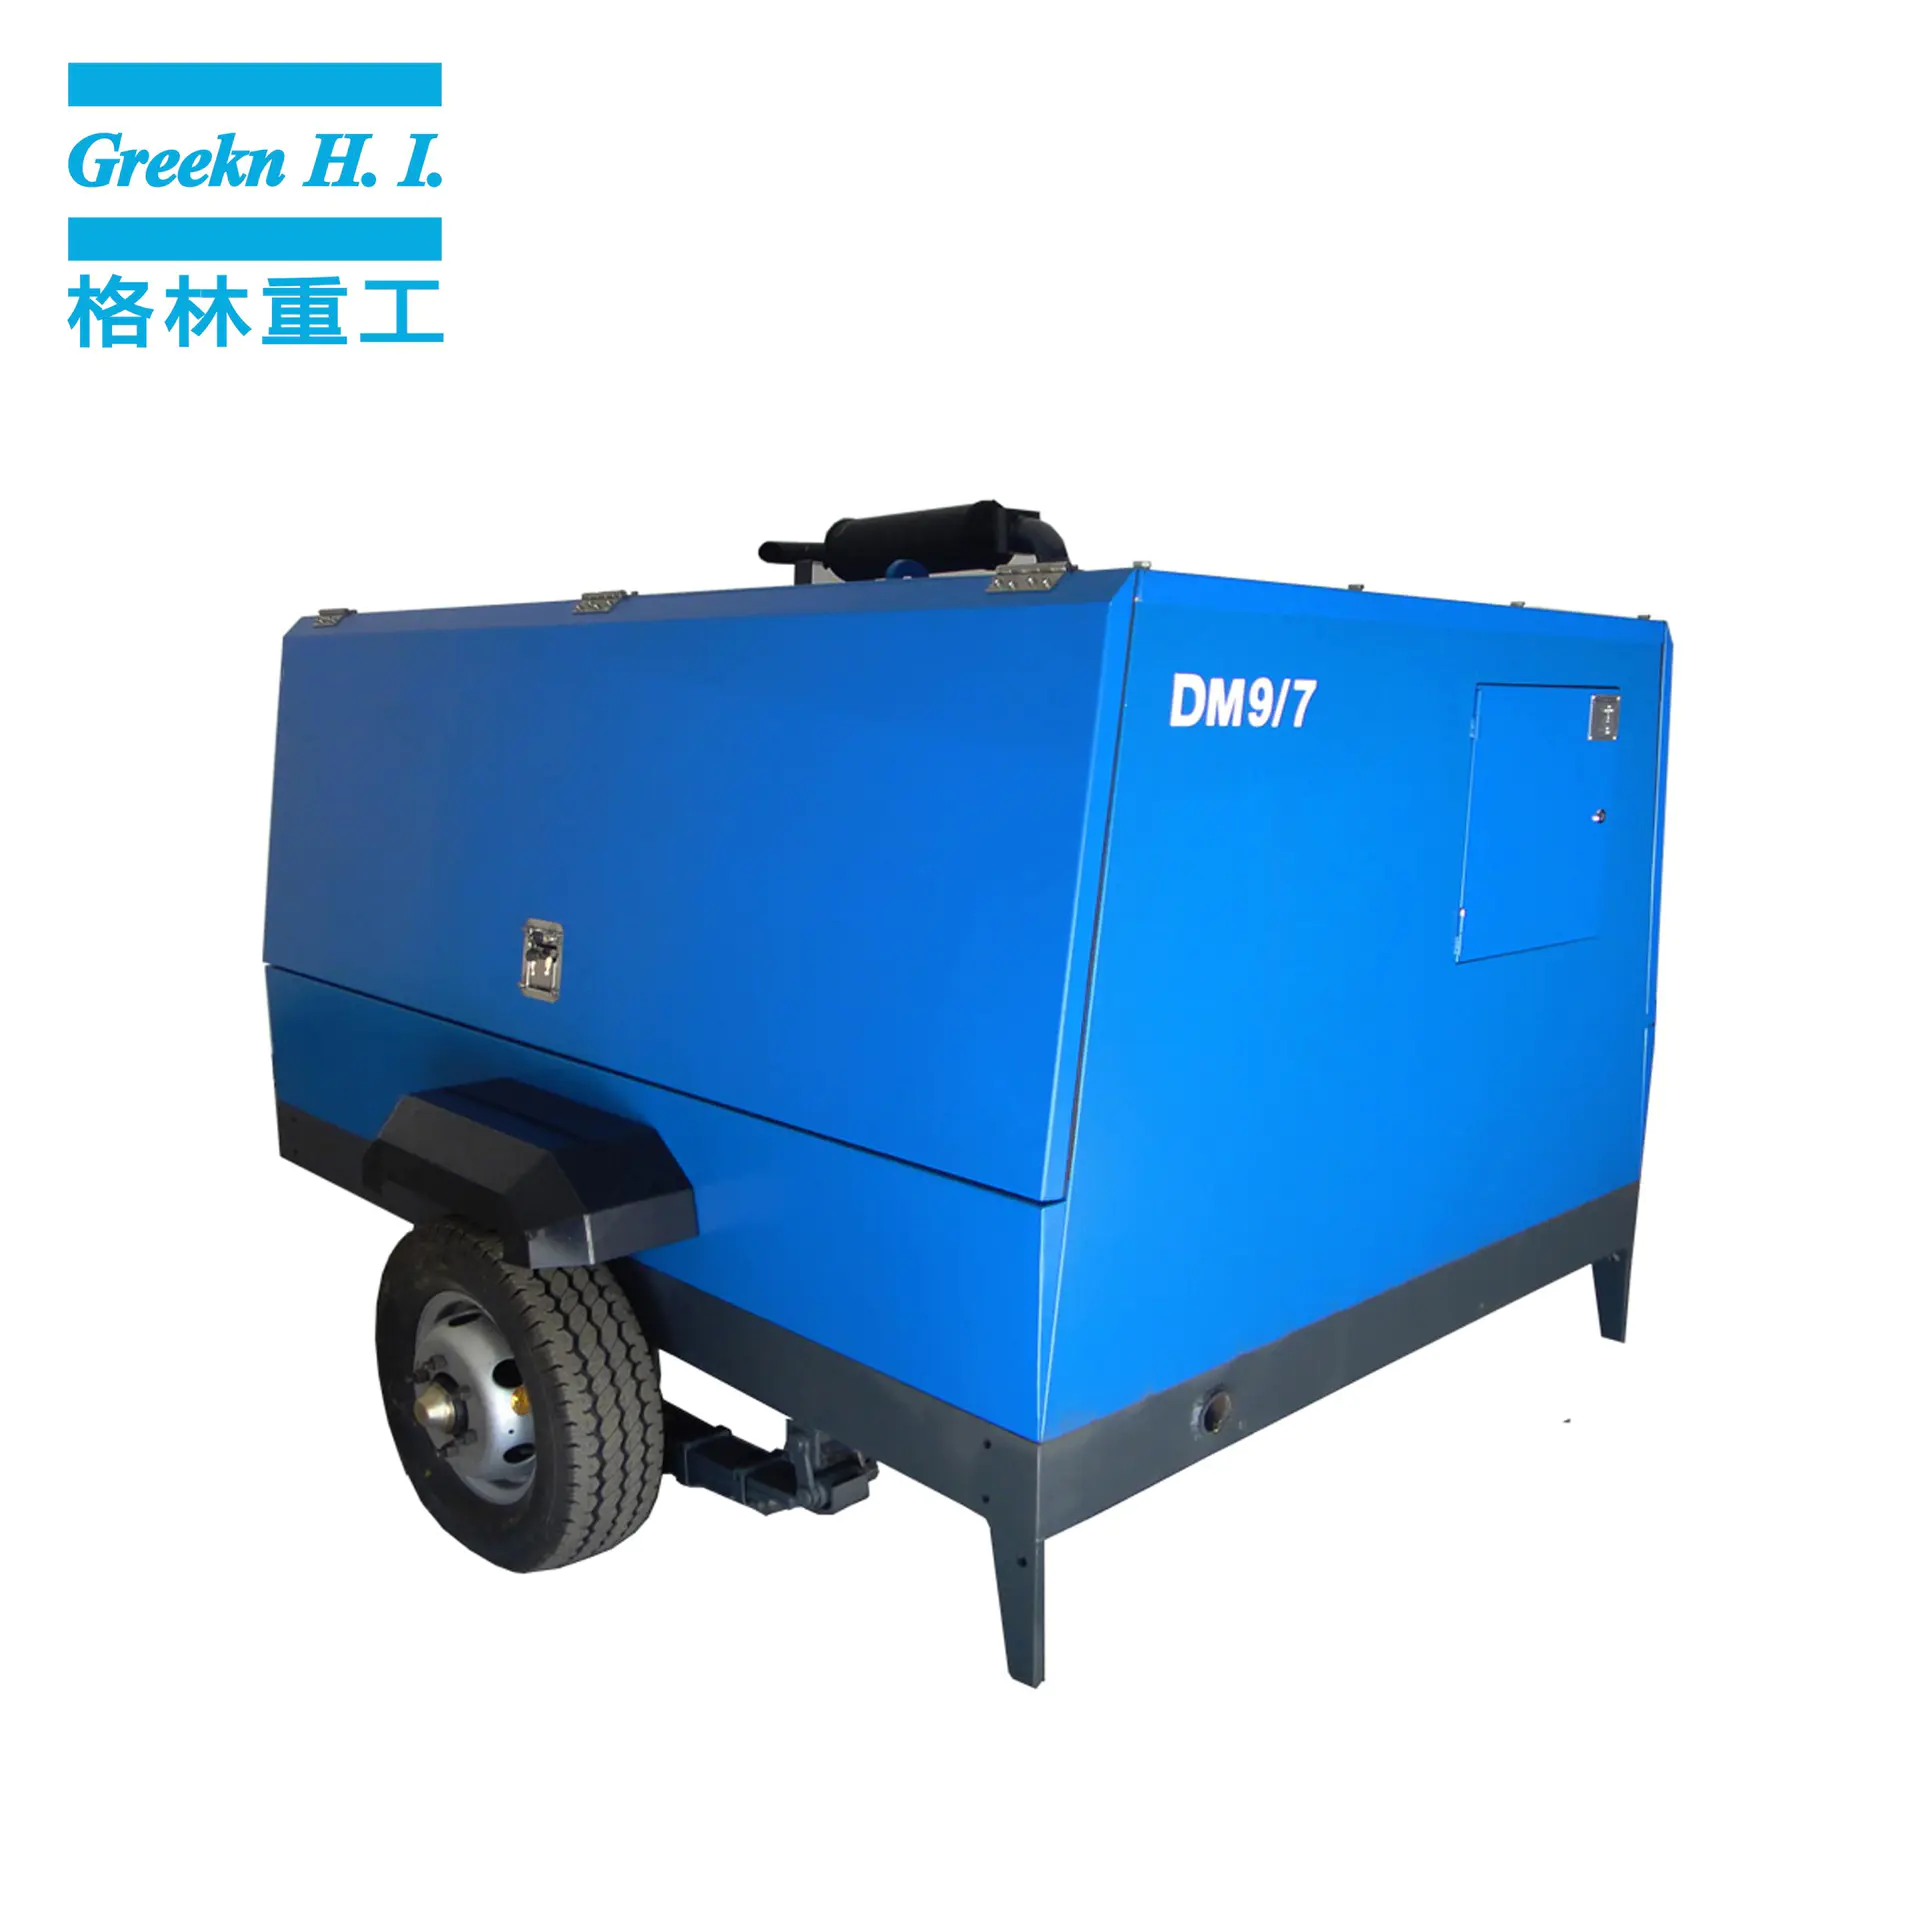 Greenair DM9/7 Diesel Engine Portable Screw Air Compressor